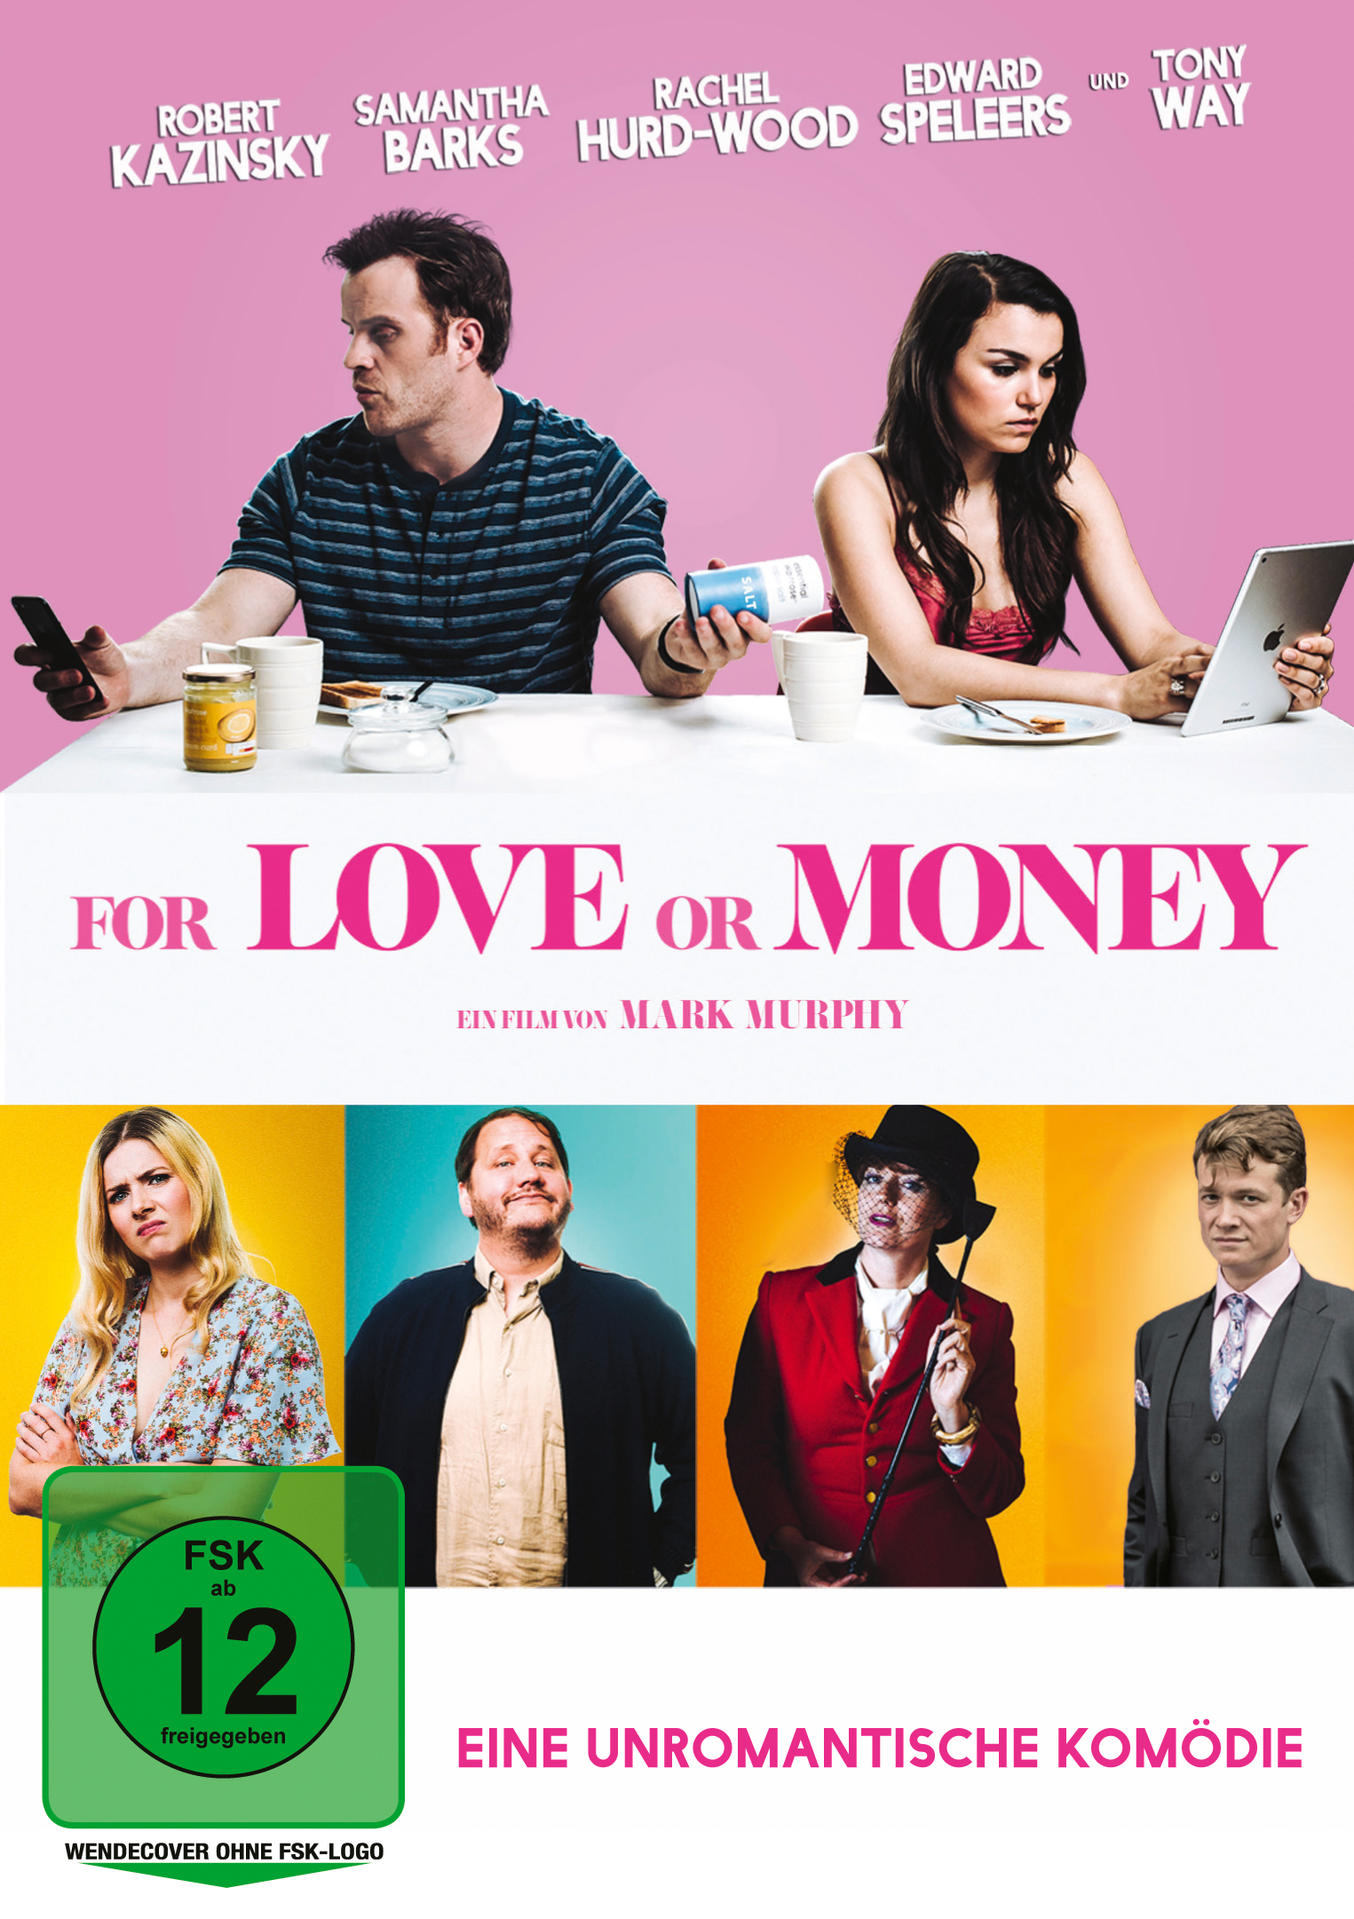 FOR MONEY DVD OR LOVE